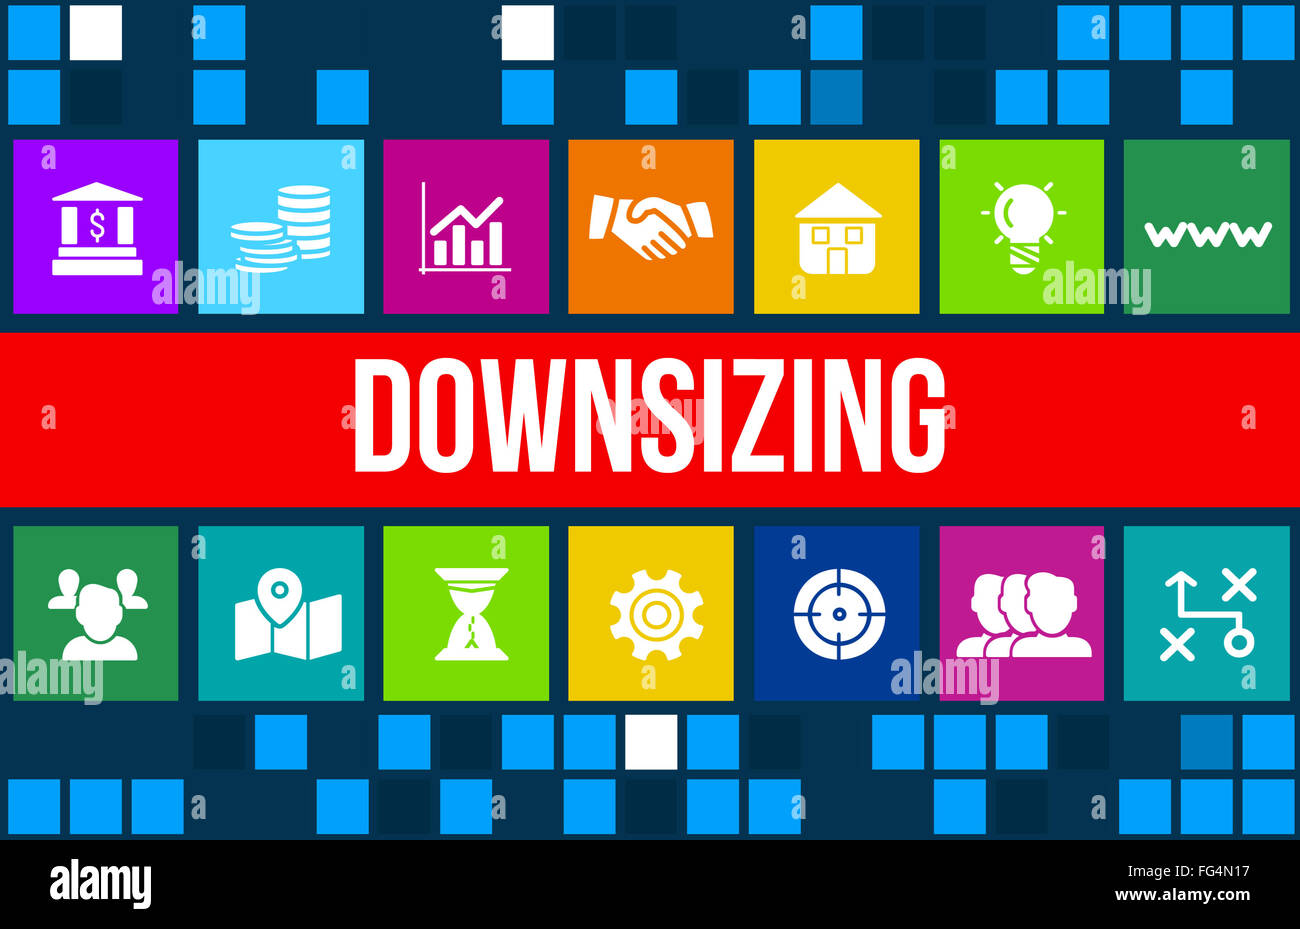 Downsizing-Konzept mit Business Icons und Exemplar Bild. Stockfoto